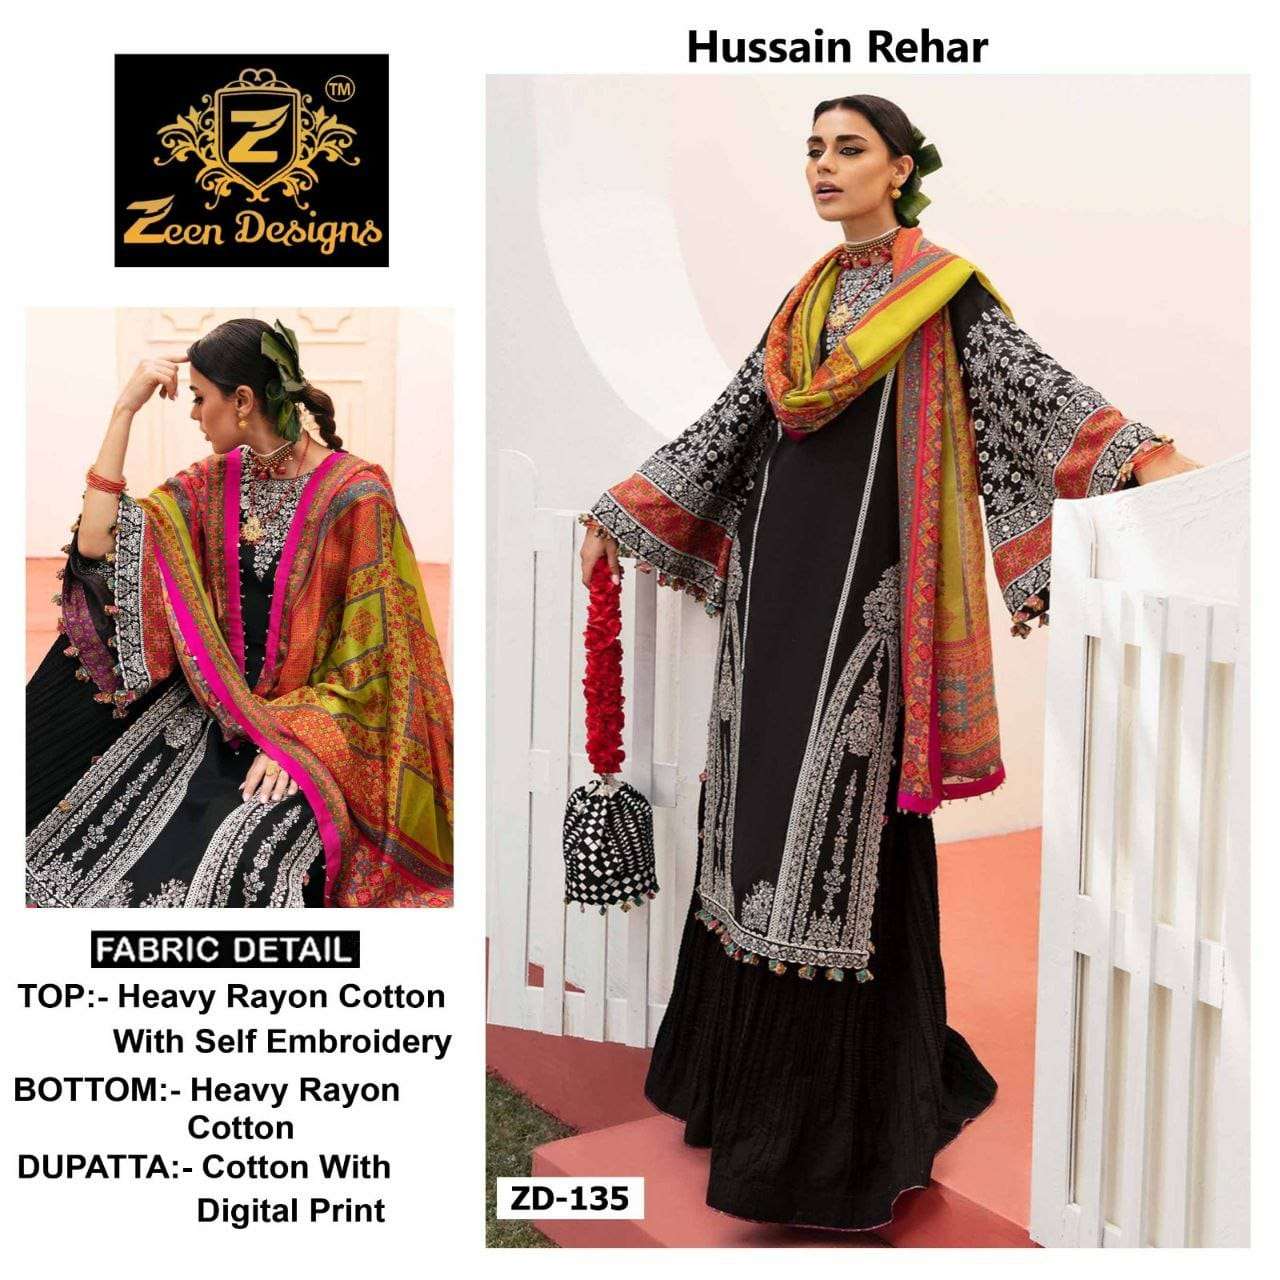 zeen designs presents catalogue husaain rehar zd 135 series heavy reyon cotton with self embroidery black colour pakistani dress pakistani suit 